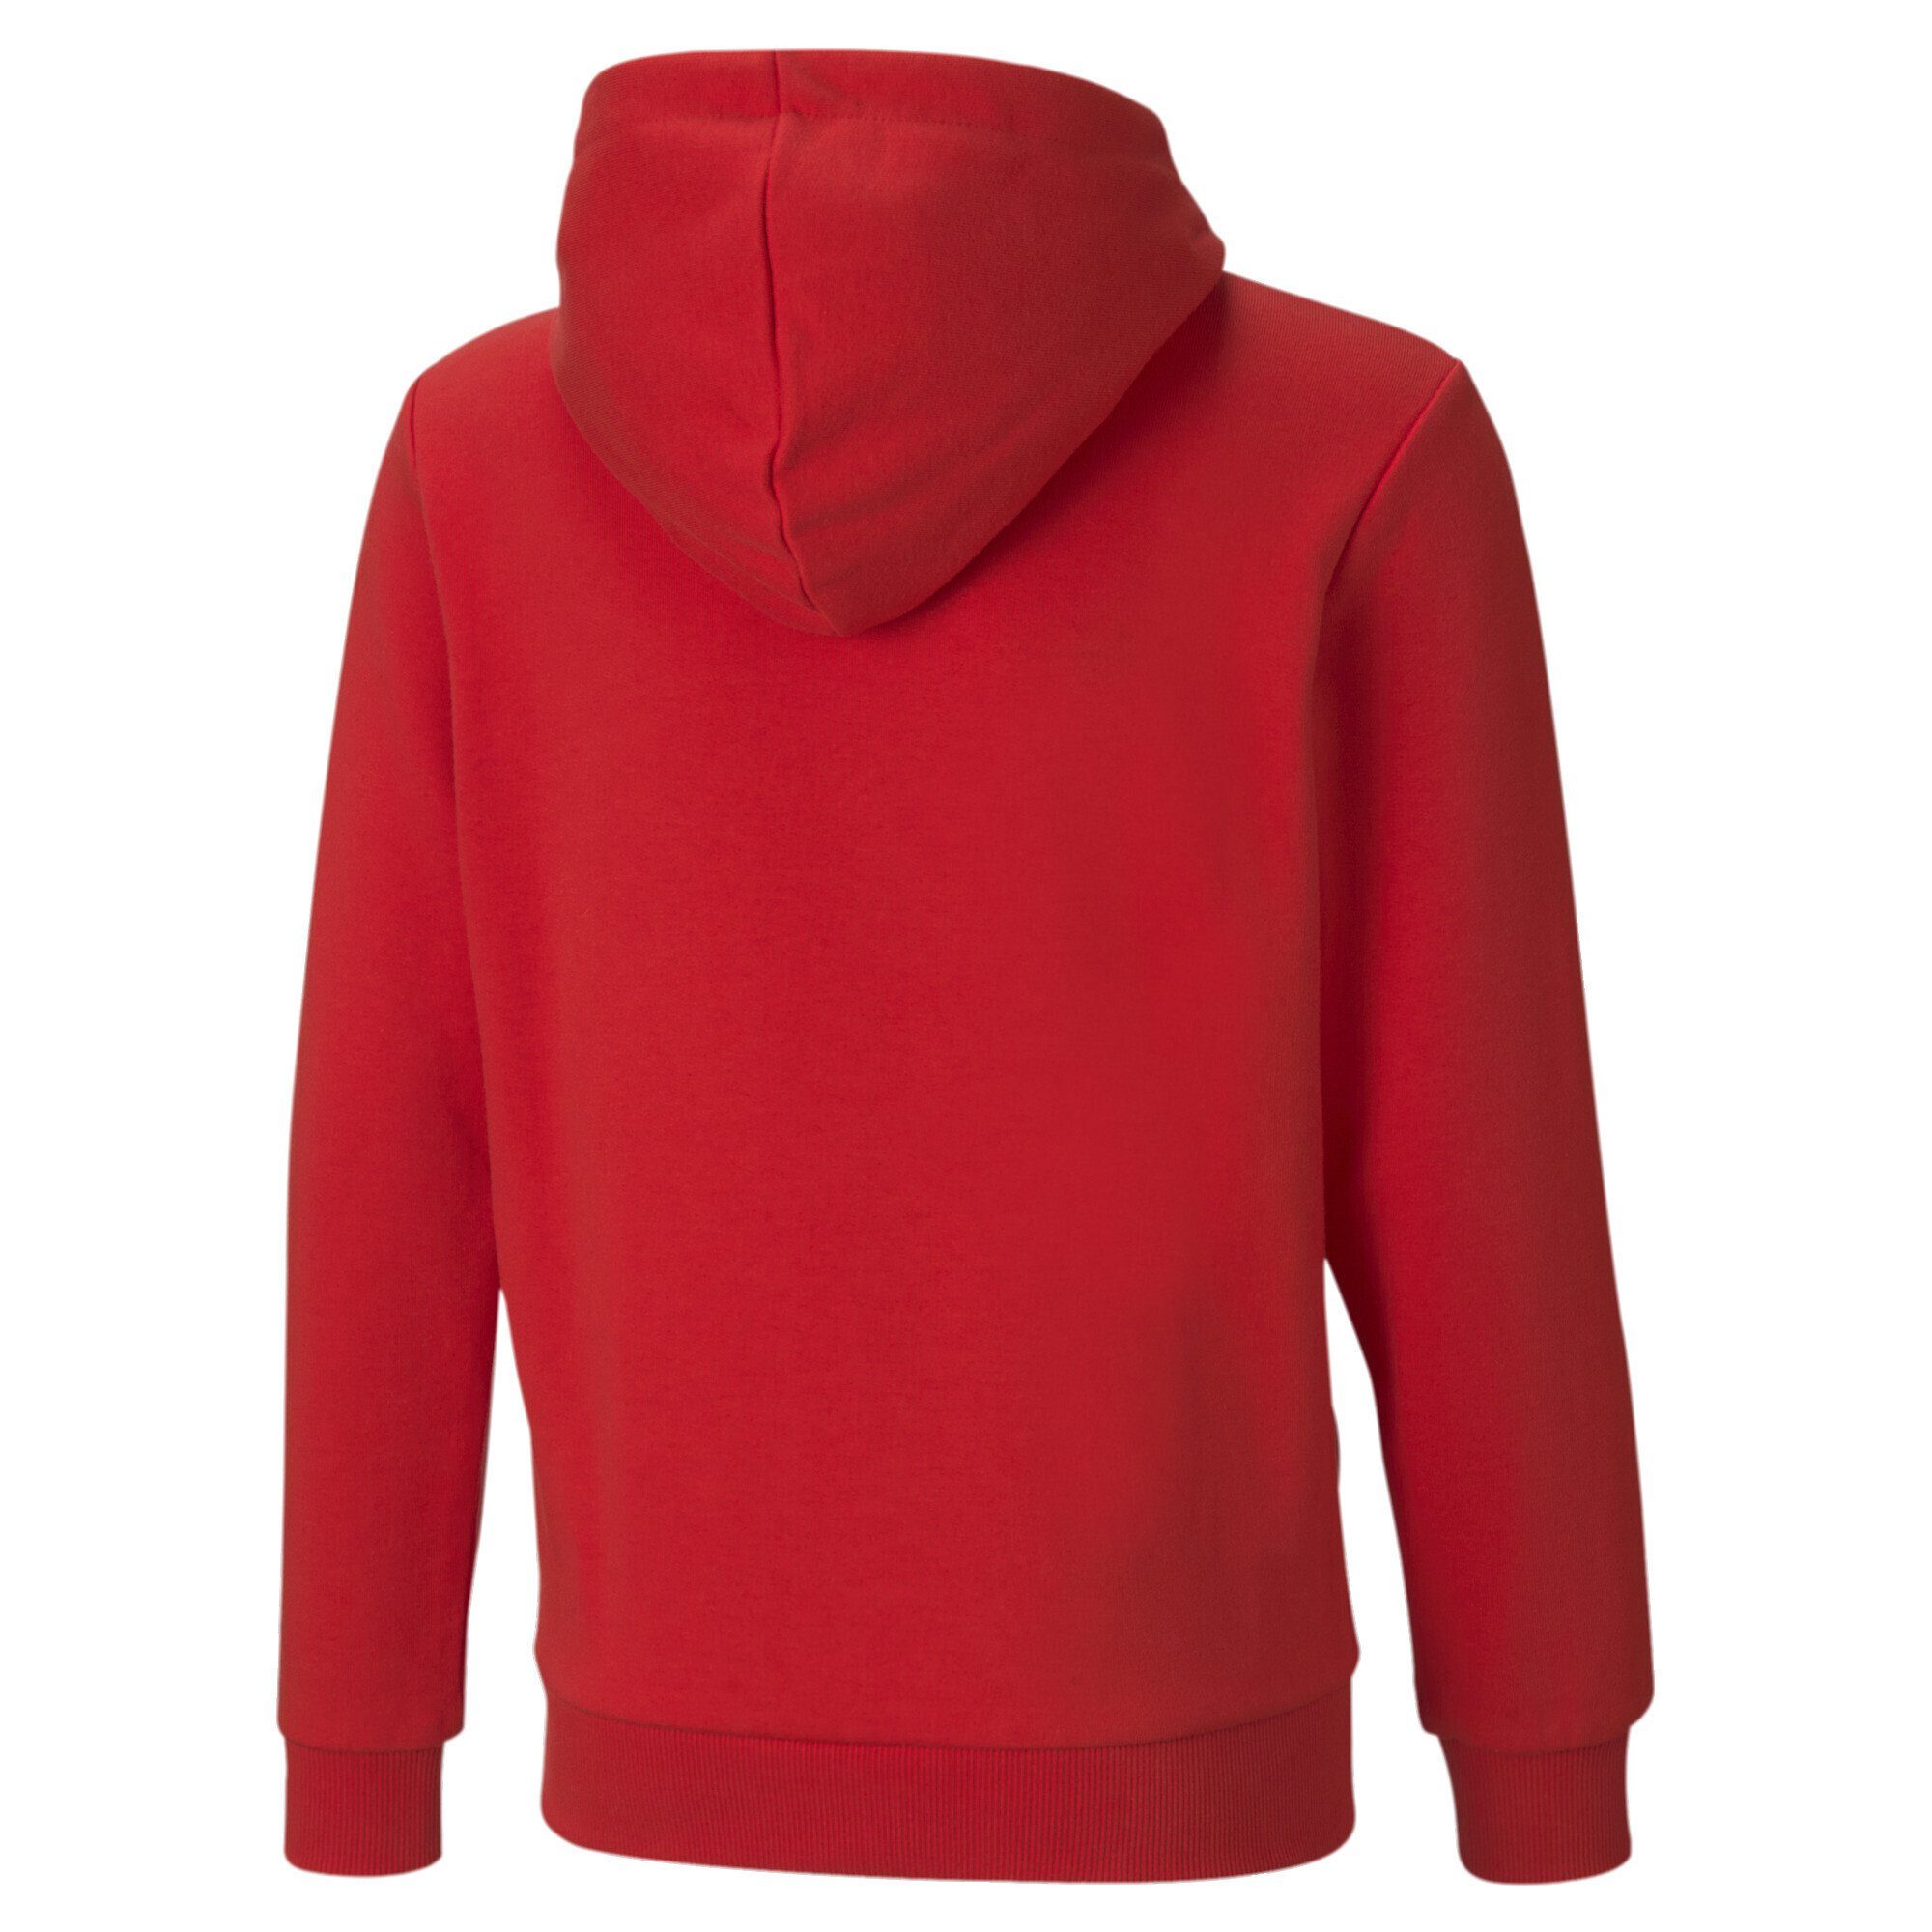 PUMA Sweatshirt Hoodie High Logo Risk Classics Red Jungen